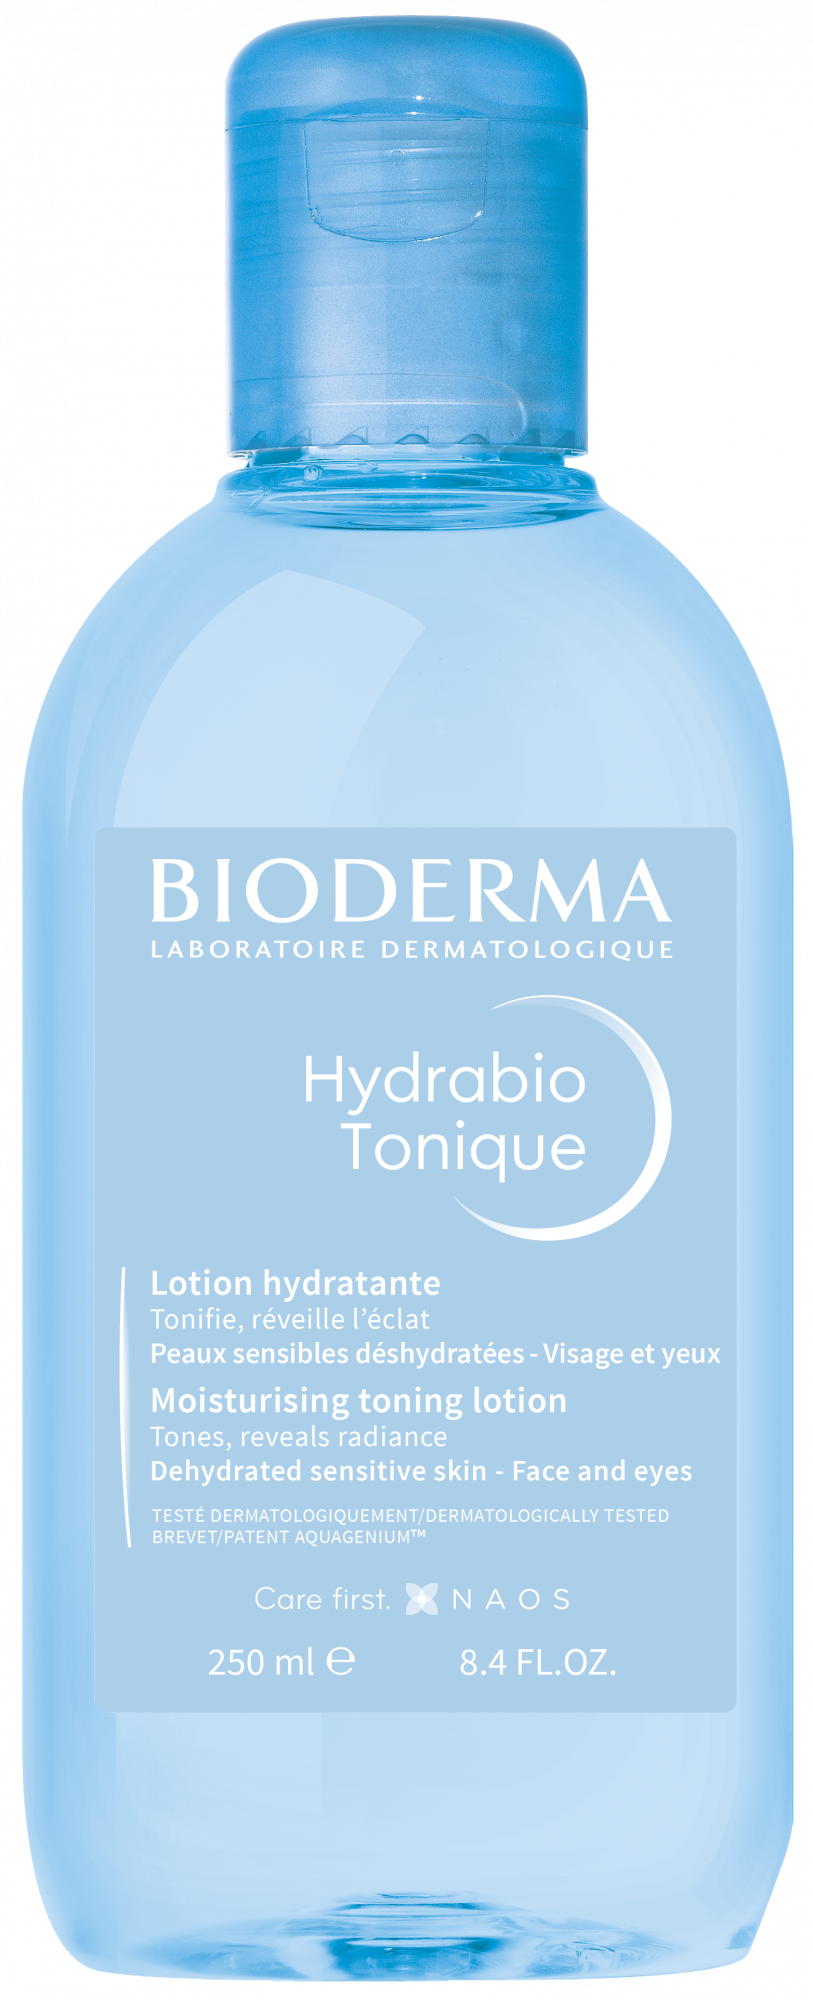 Hydrabio Tonic Lotion | Moisturizing for sensitive, dehydrated skin